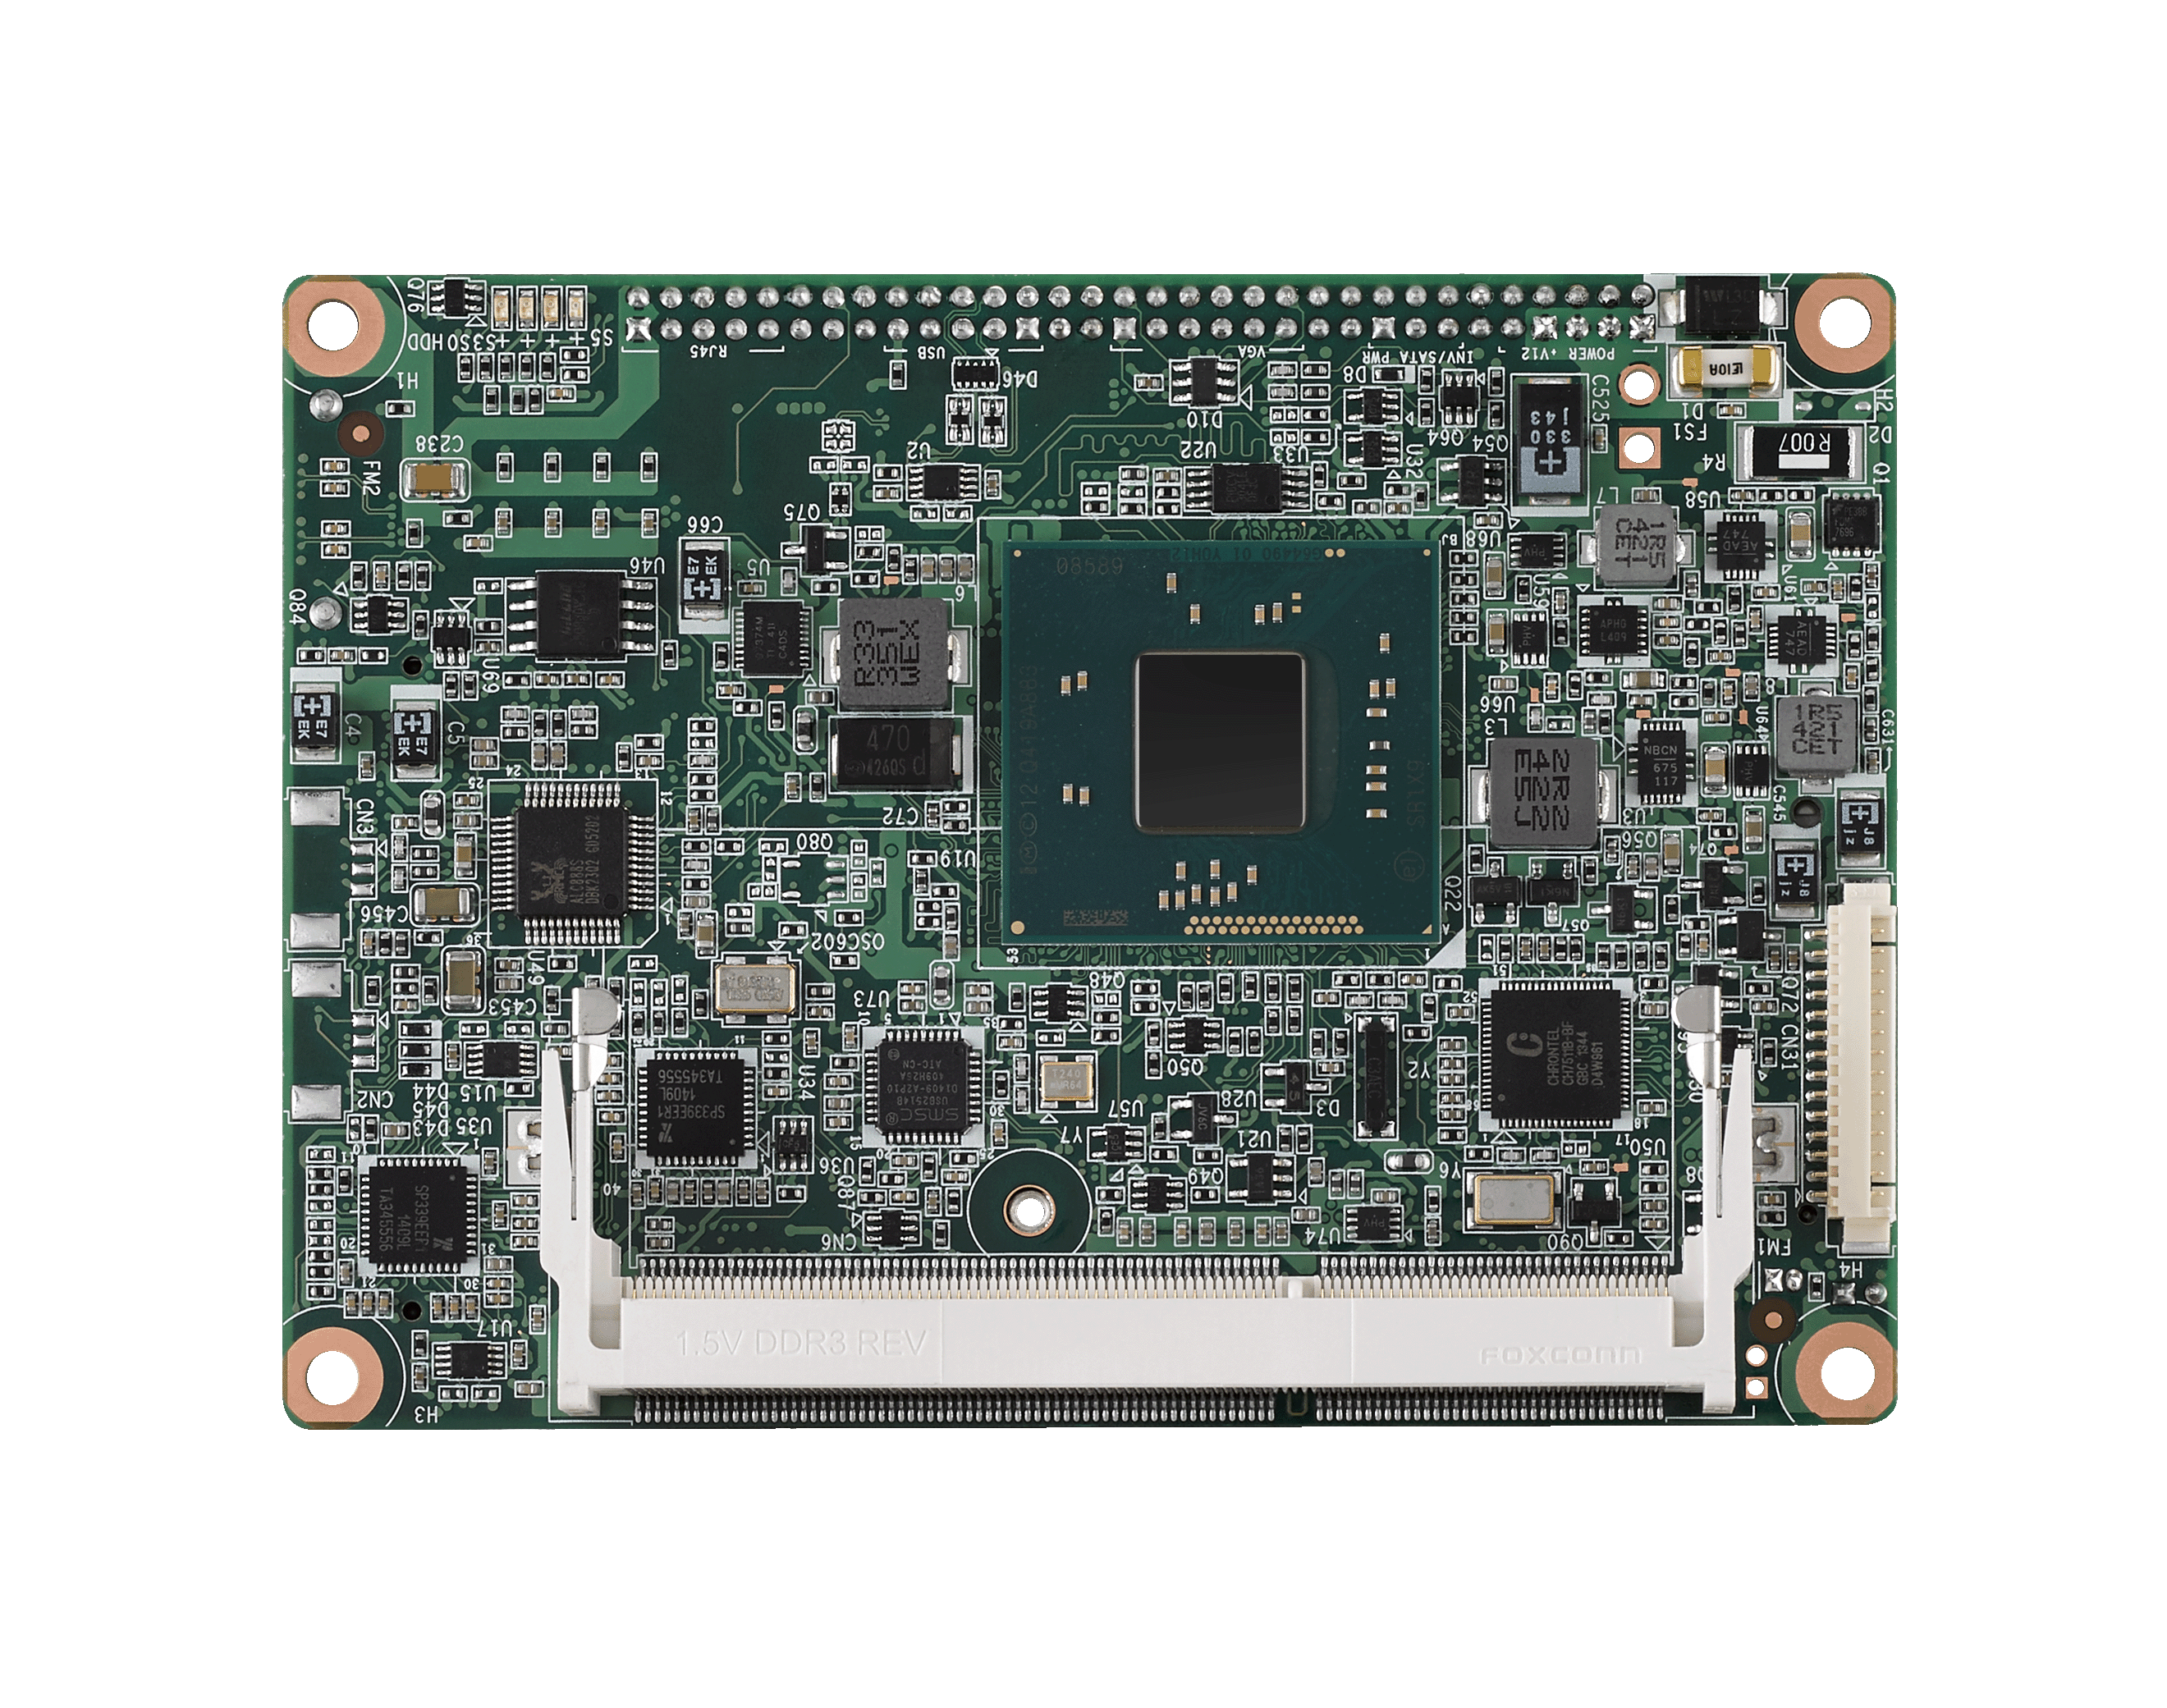 Intel Celeron Single Board Computer N2930 1.83G Pico-ITX SBC with DDR3L, 18/24-bit LVDS, VGA, 
DP/HDMI, 1 GbE, Full-size Mini PCIe,  
4 USB, 2 COM, SMBus, I 2 C, mSATA & MIOe, Box Wafer Connector